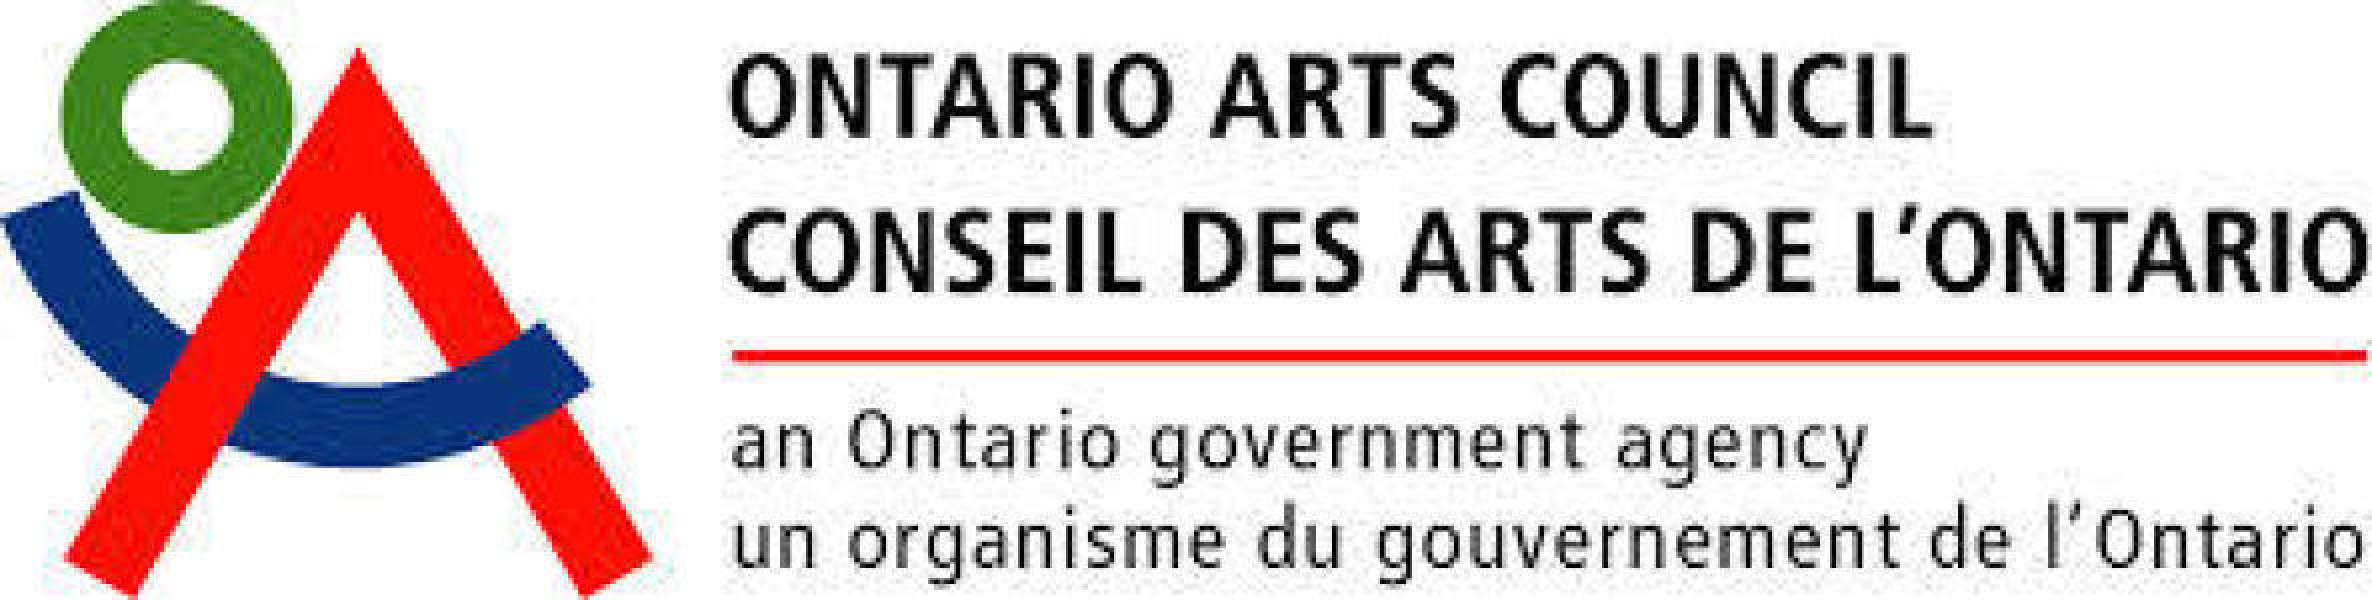 Ontario Arts Council sponsors Barbra Lica event!